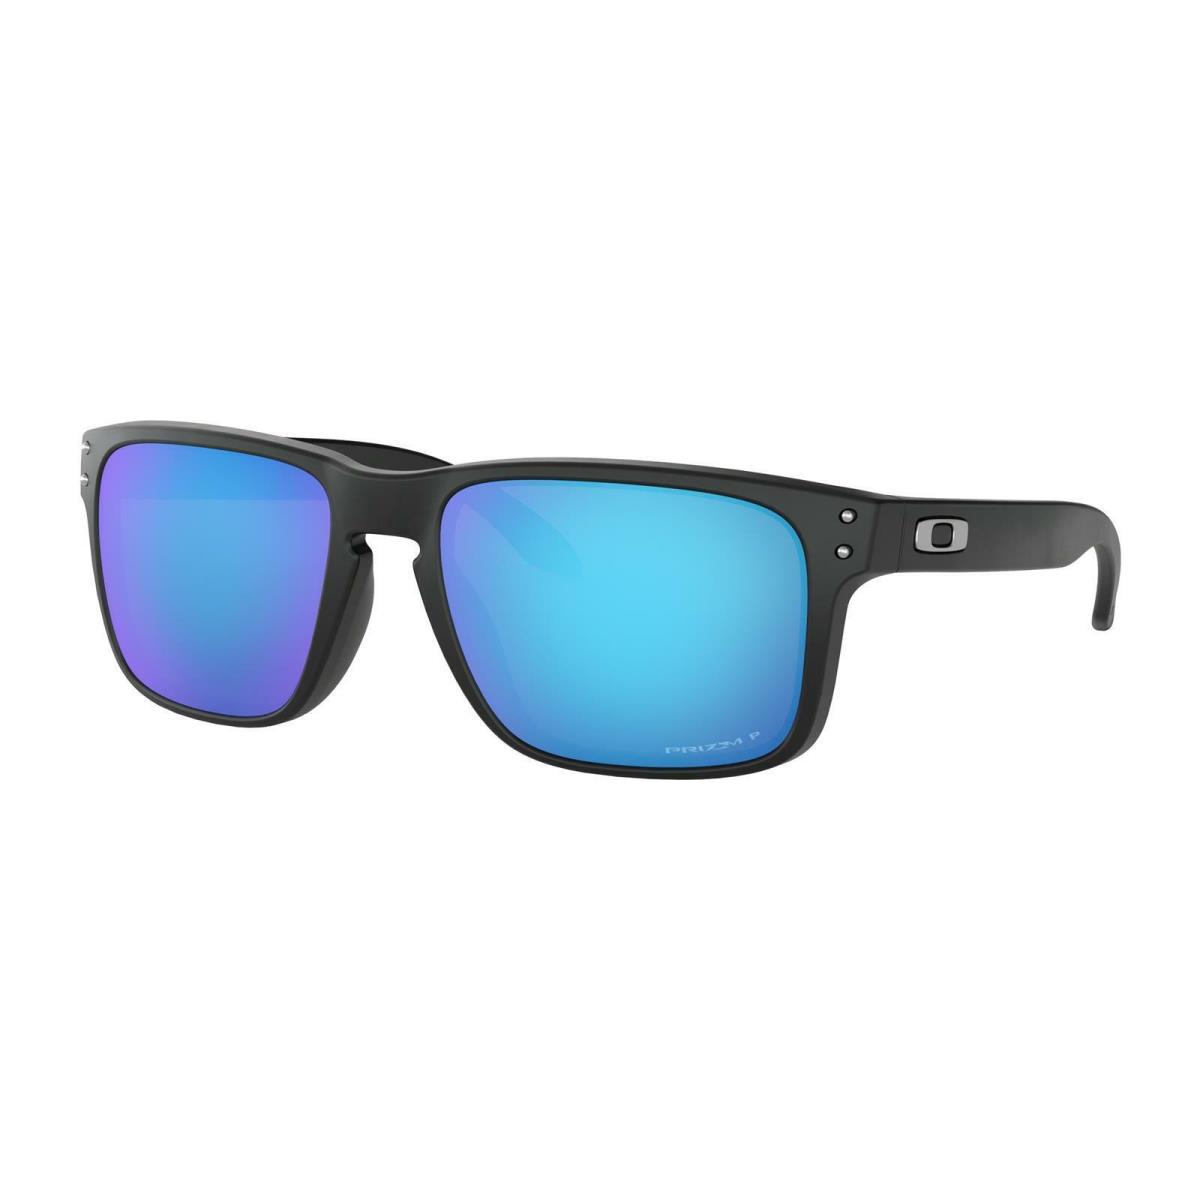 Oakley Holbrook Polarized Blue Mirror Sunglasses OO9102-F0 55